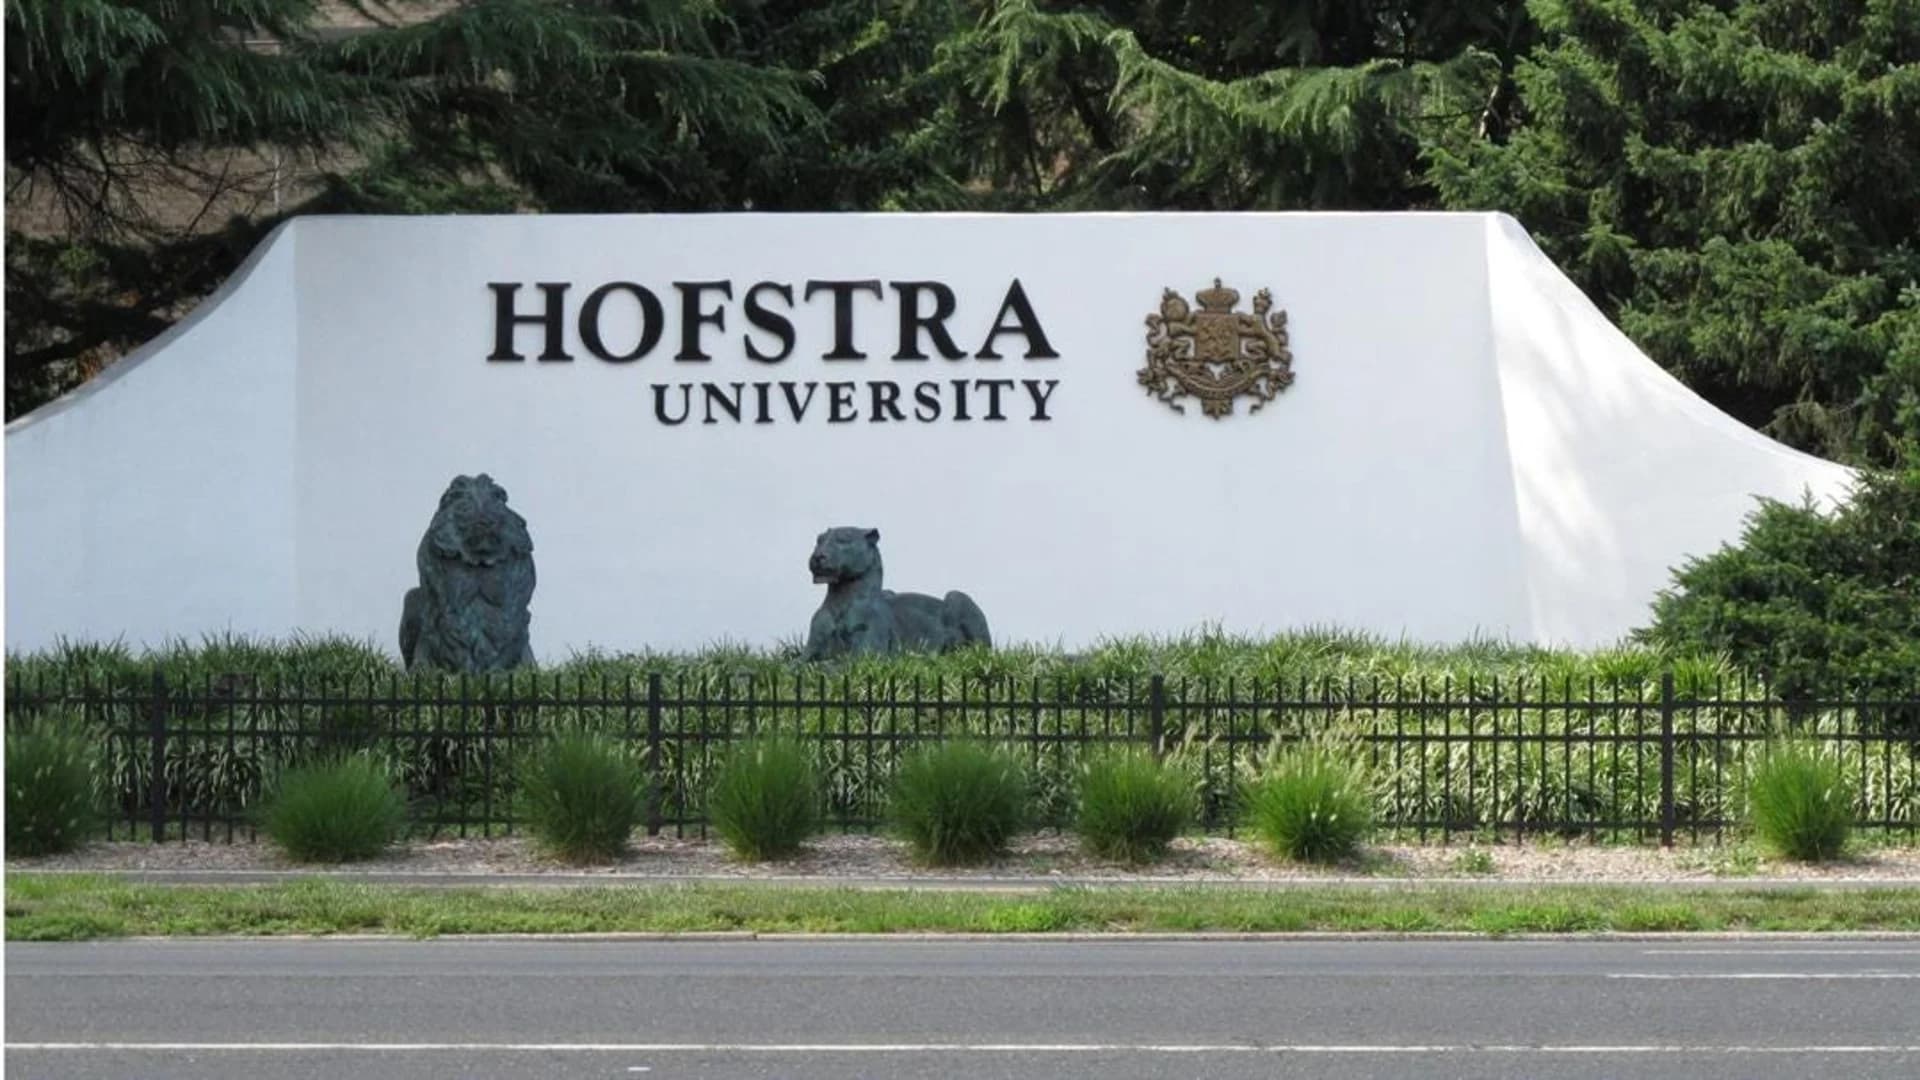 14 guidelines for a ‘Safe Start’ at Hofstra University